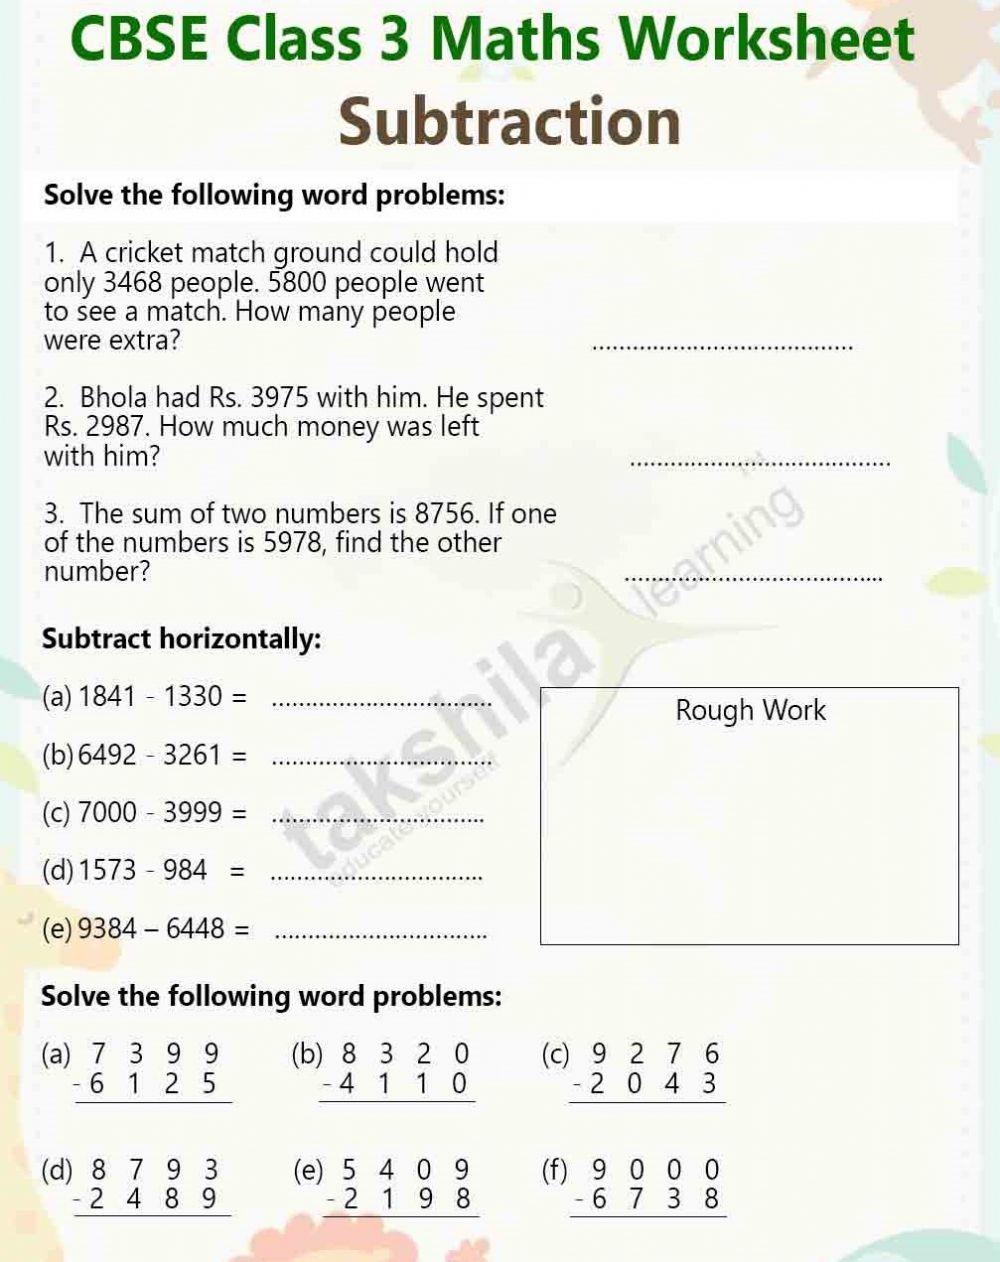 Subtraction worksheet